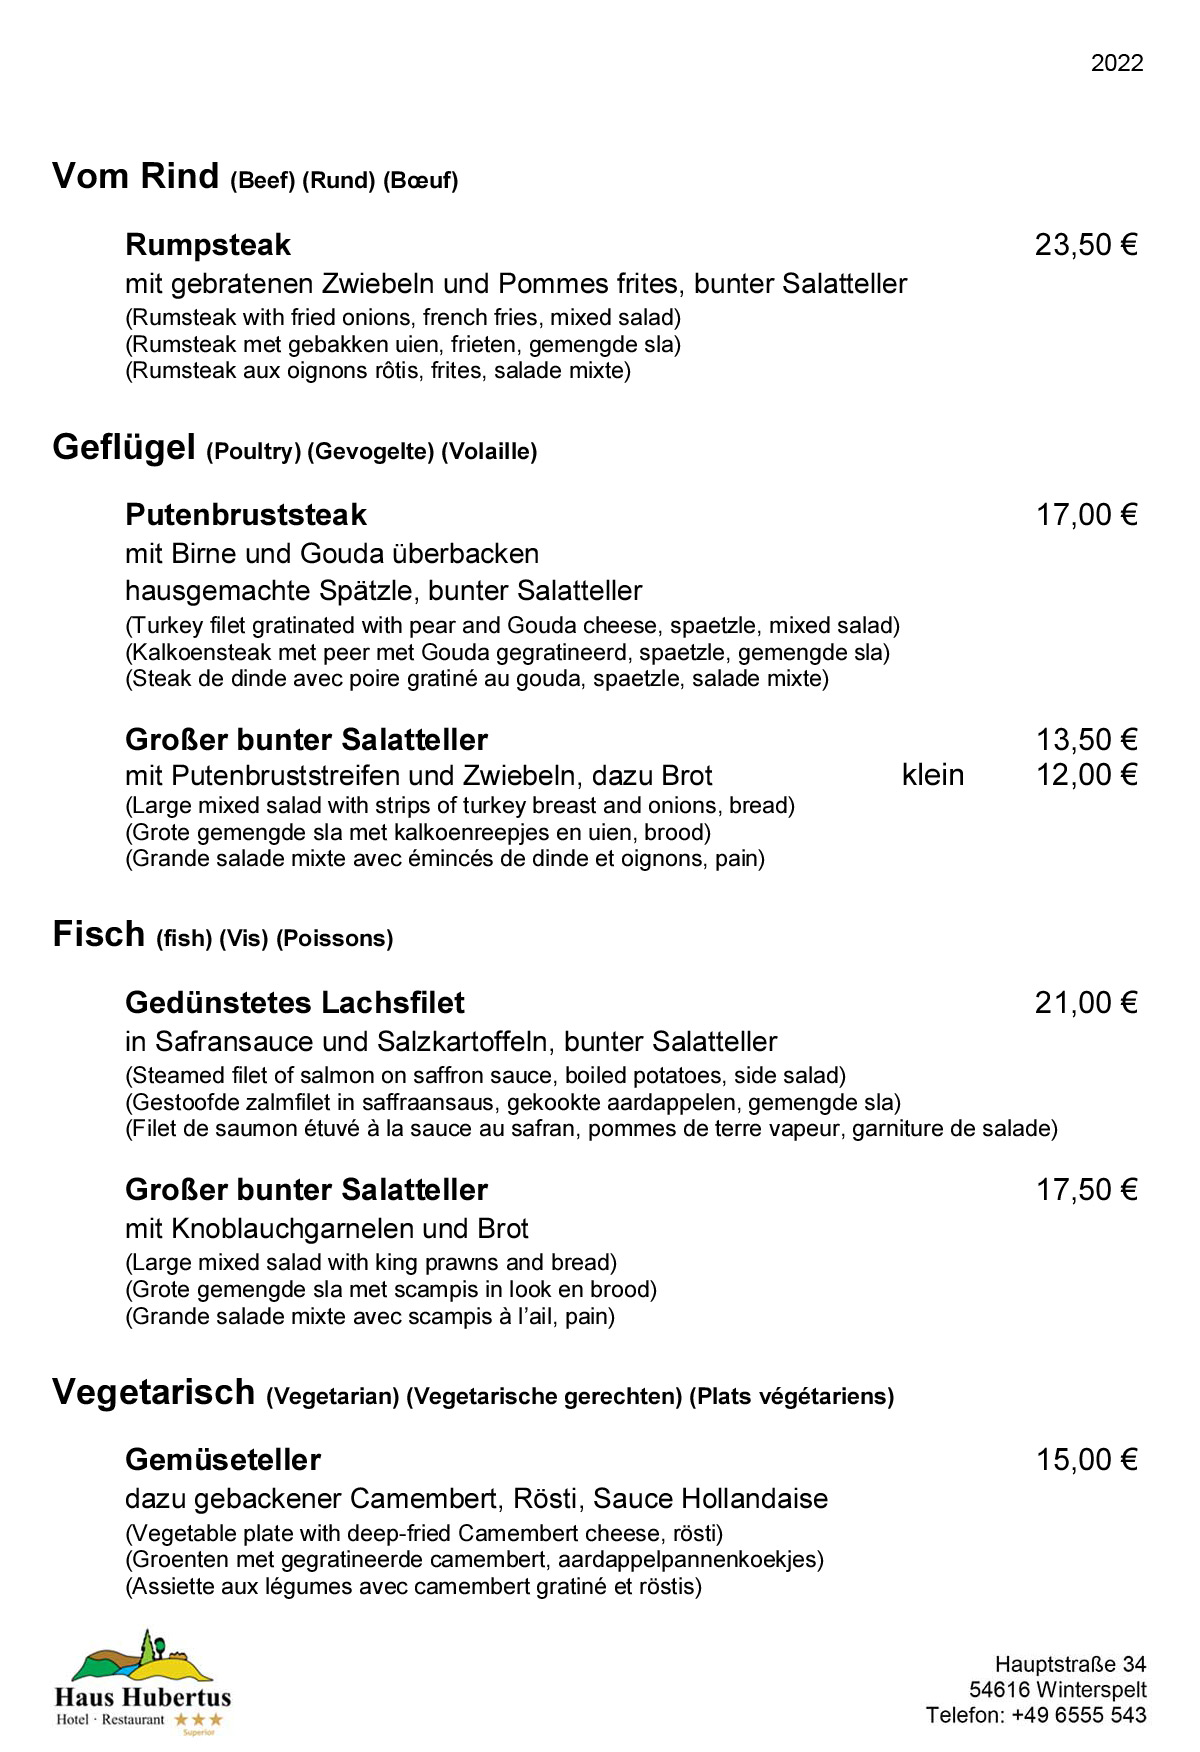 Hotel - Restaurant Haus Hubertus - menu 07/2022 - onze klassiekers - pagina 2